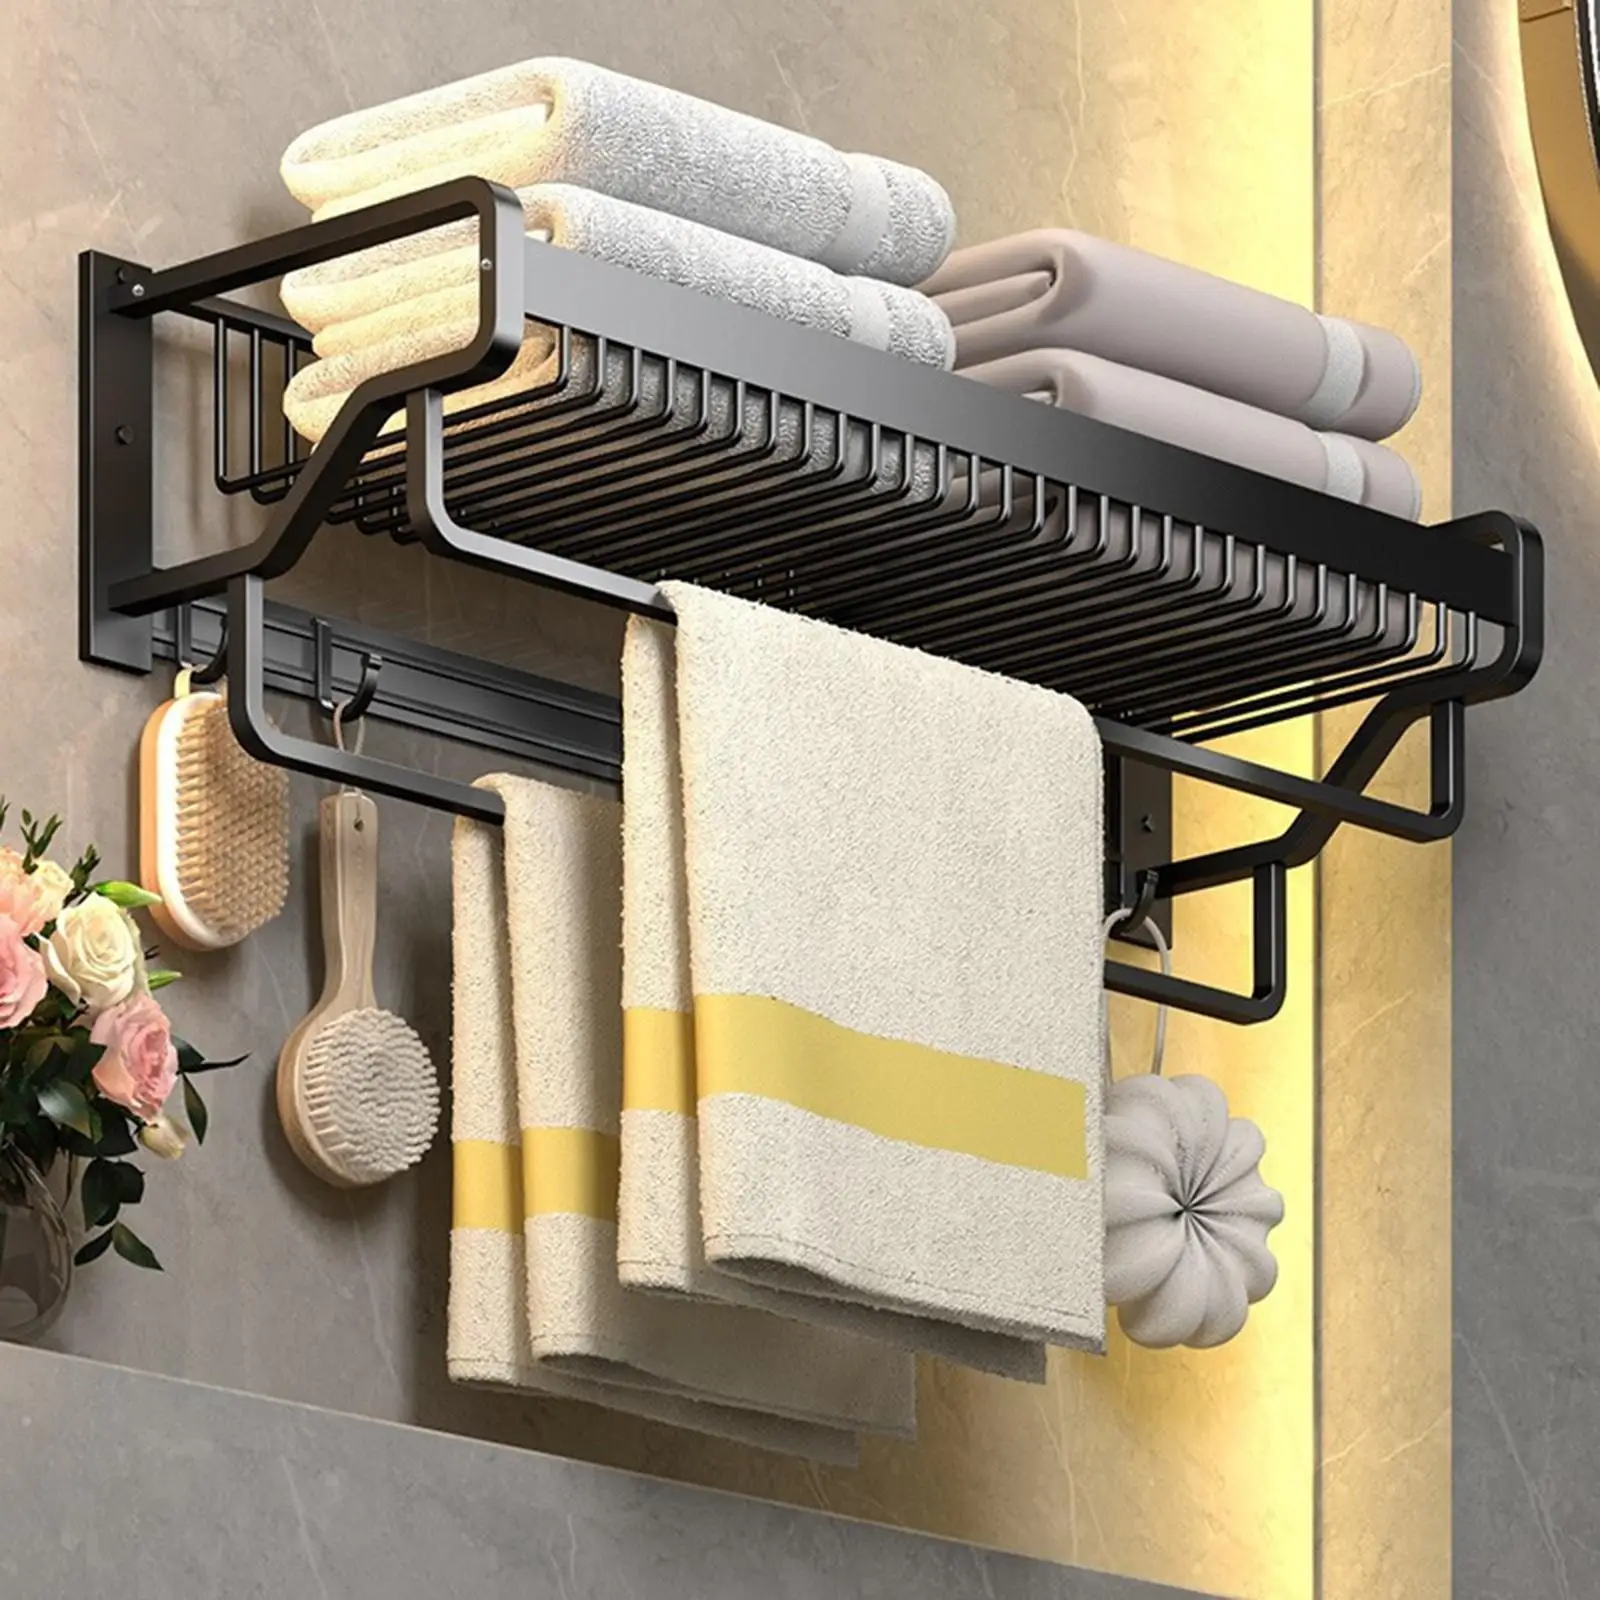 Towel Rail Rack Holder Bathroom with Towel Bar with Hook Shower Shelf for Hotel Bedroom